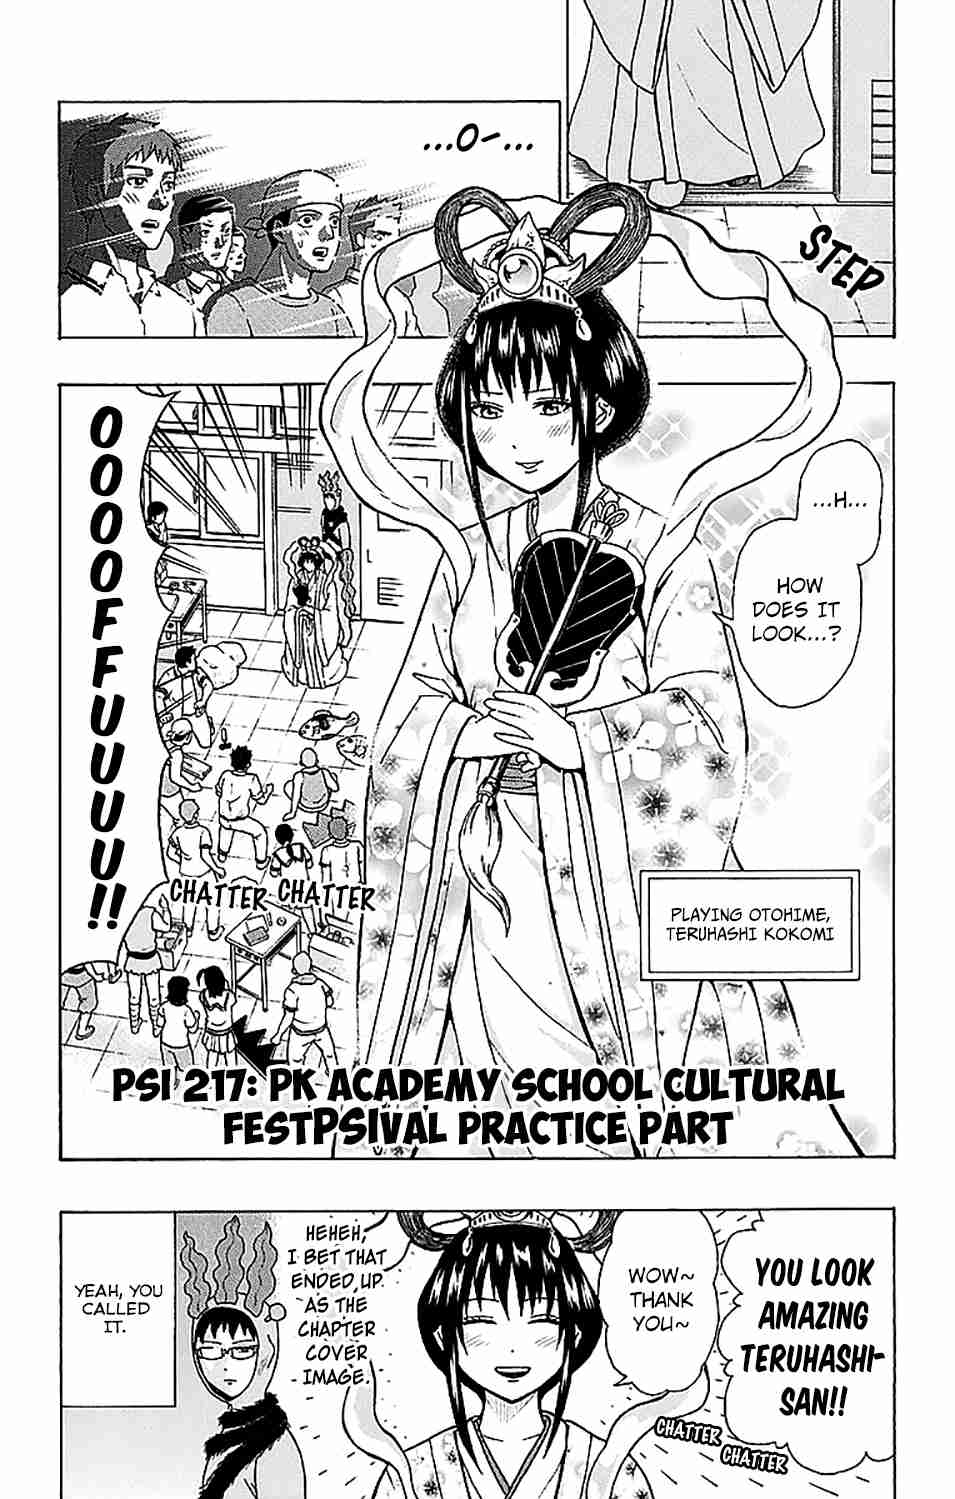 Saiki Kusuo no PSI nan Vol. 21 Ch. 217 PK Academy School Cultural FestPSIval Practice Part